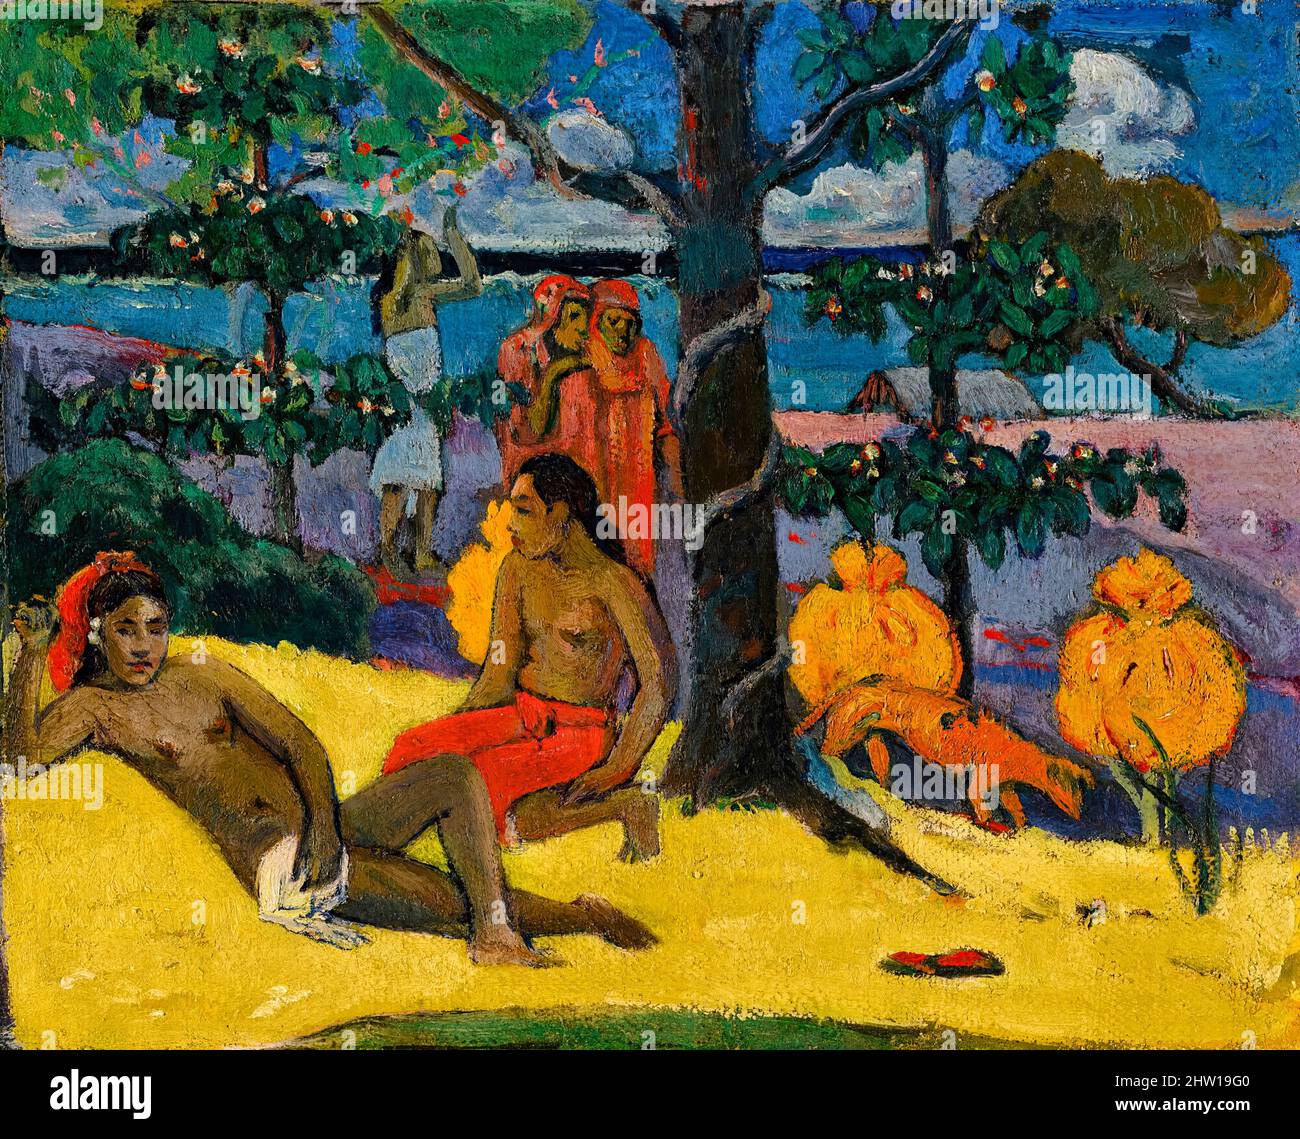 Paul Gauguin, Te Arii Vahine, La Femme aux mangos (II), painting in oil on canvas, 1896 Stock Photo